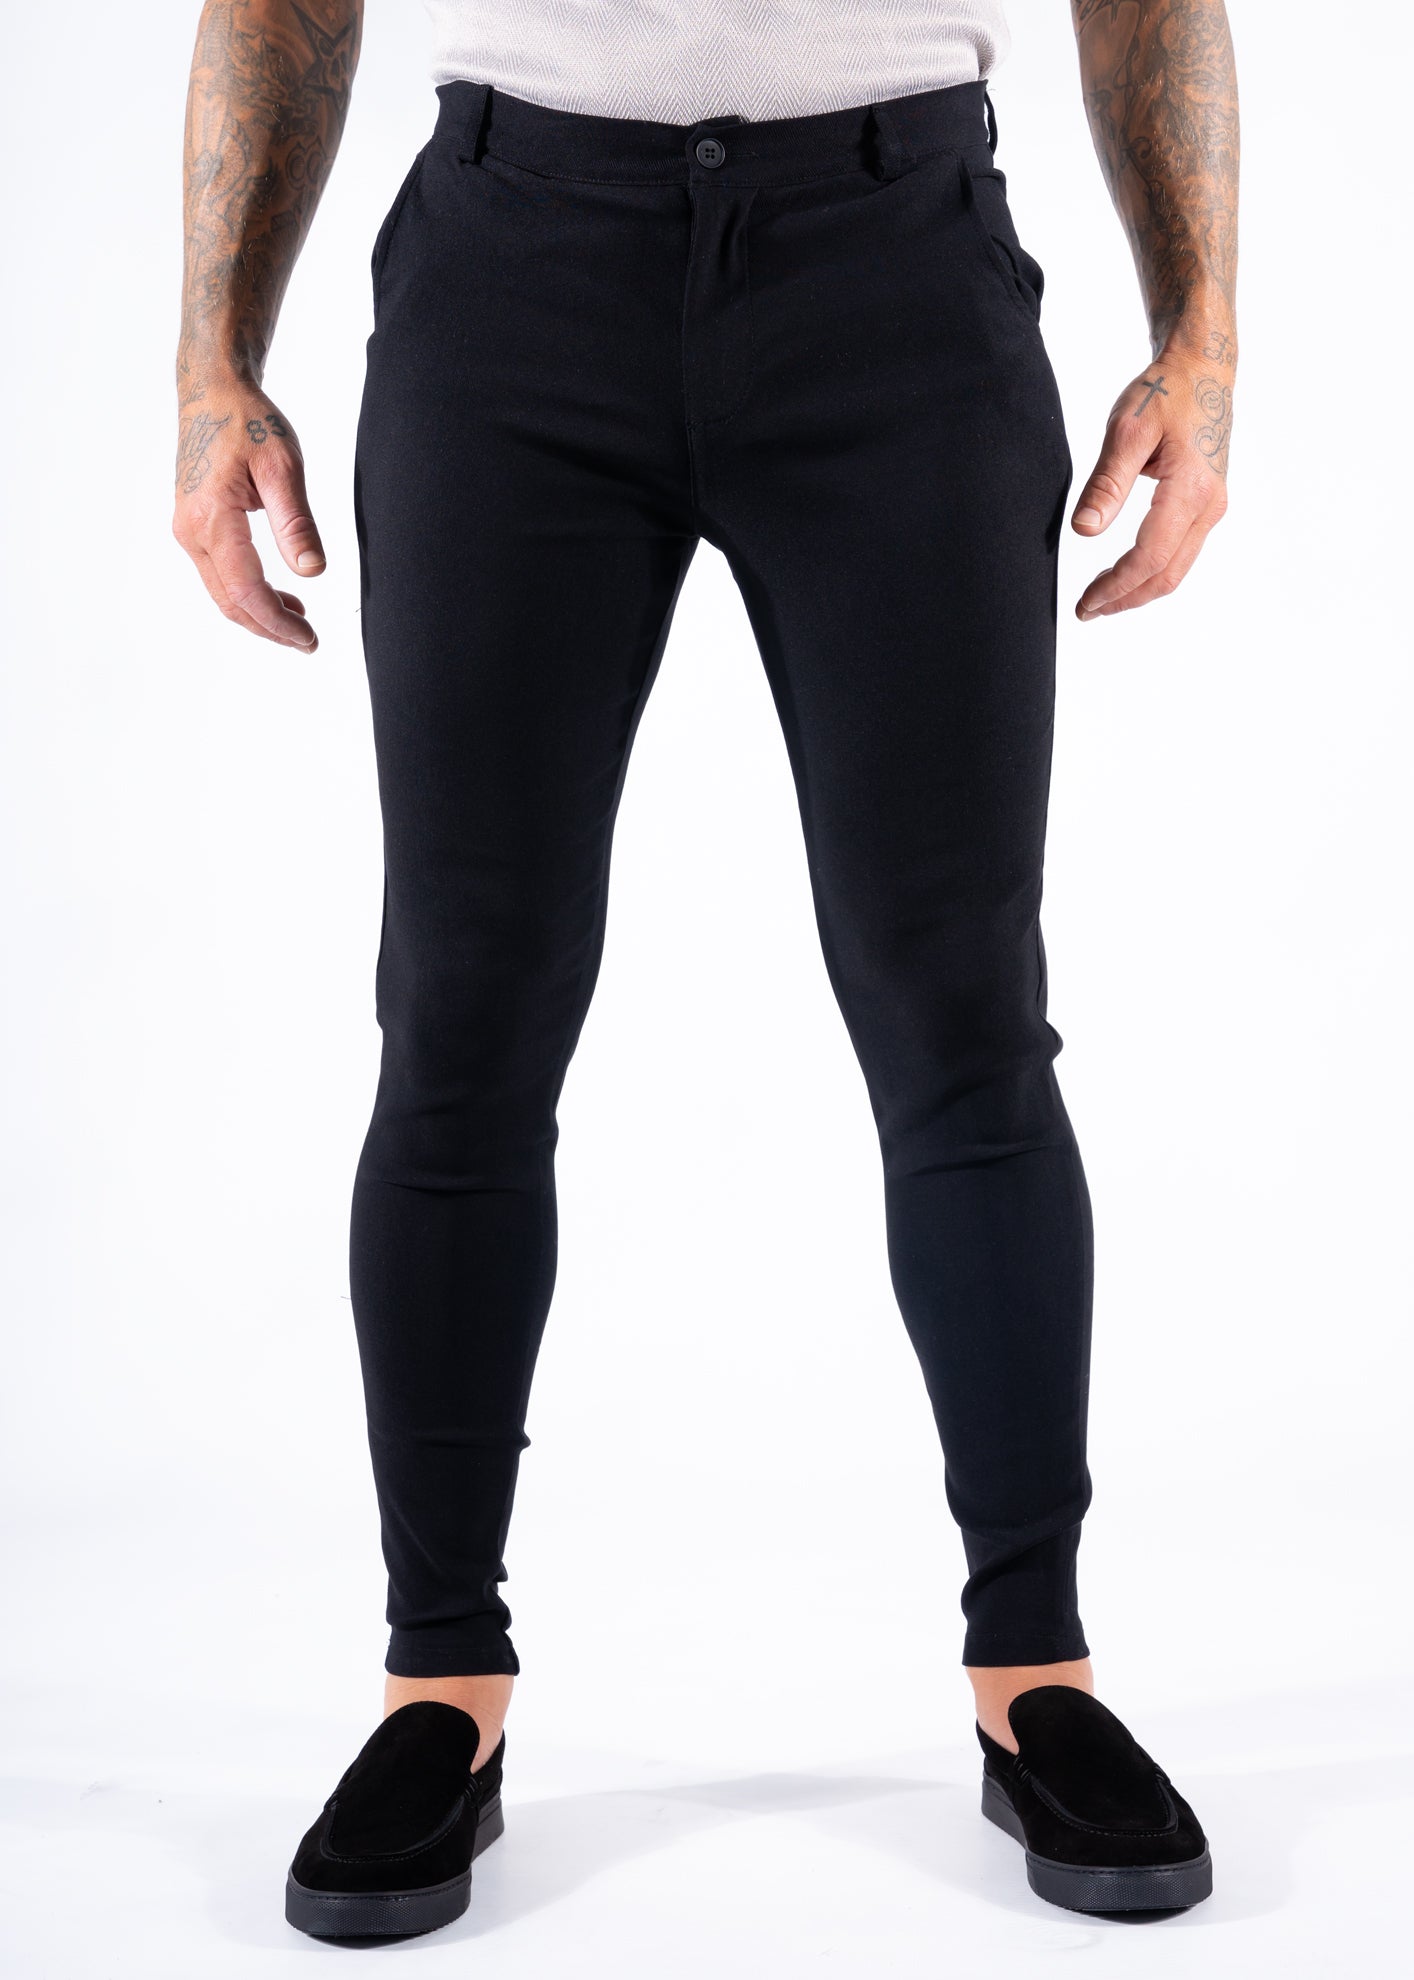 Super stretch pantalon black